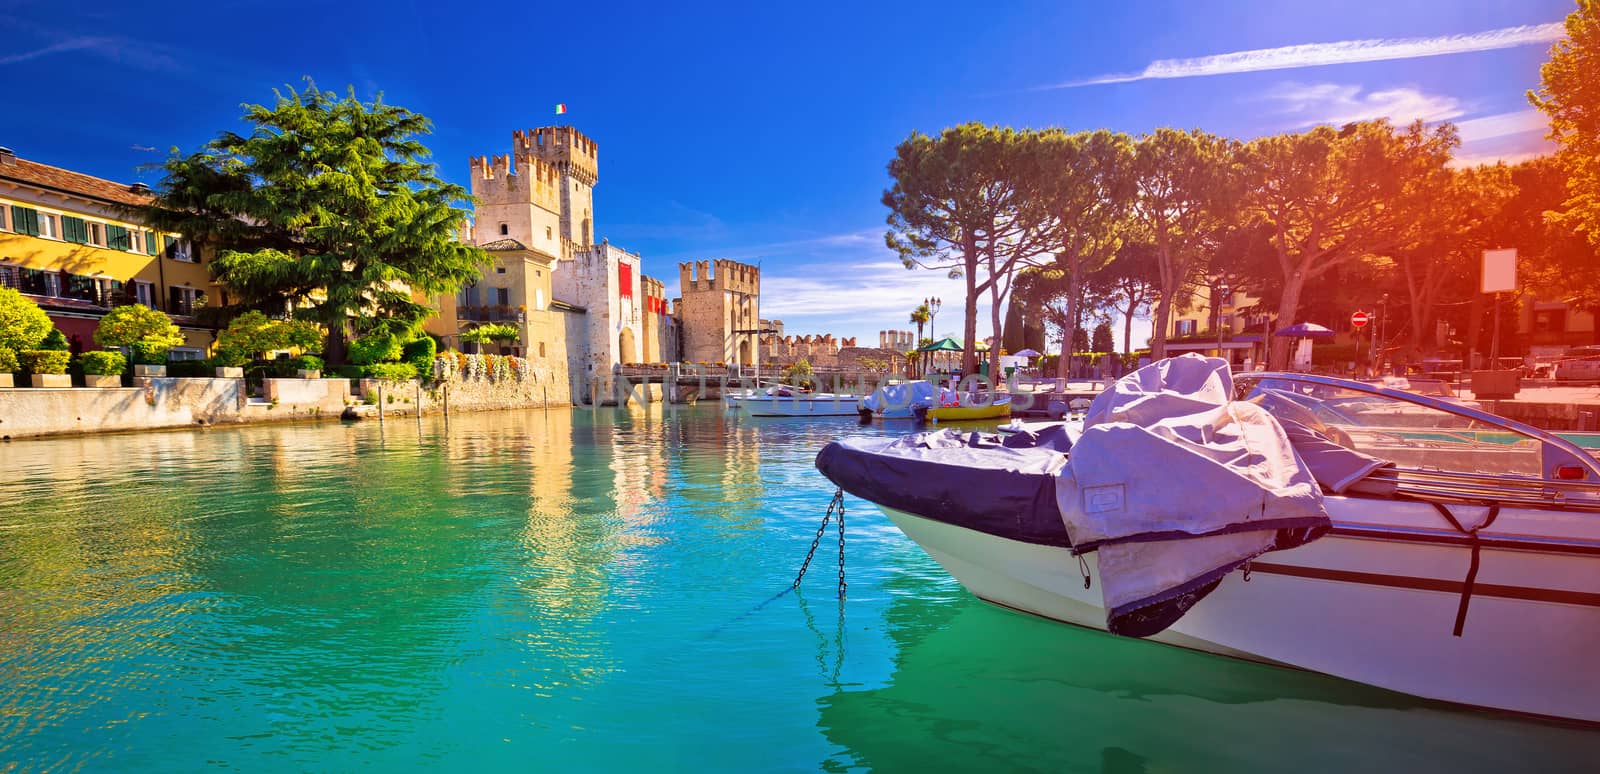 Lago di Garda town of Sirmione turquoise watefrront panoramic vi by xbrchx